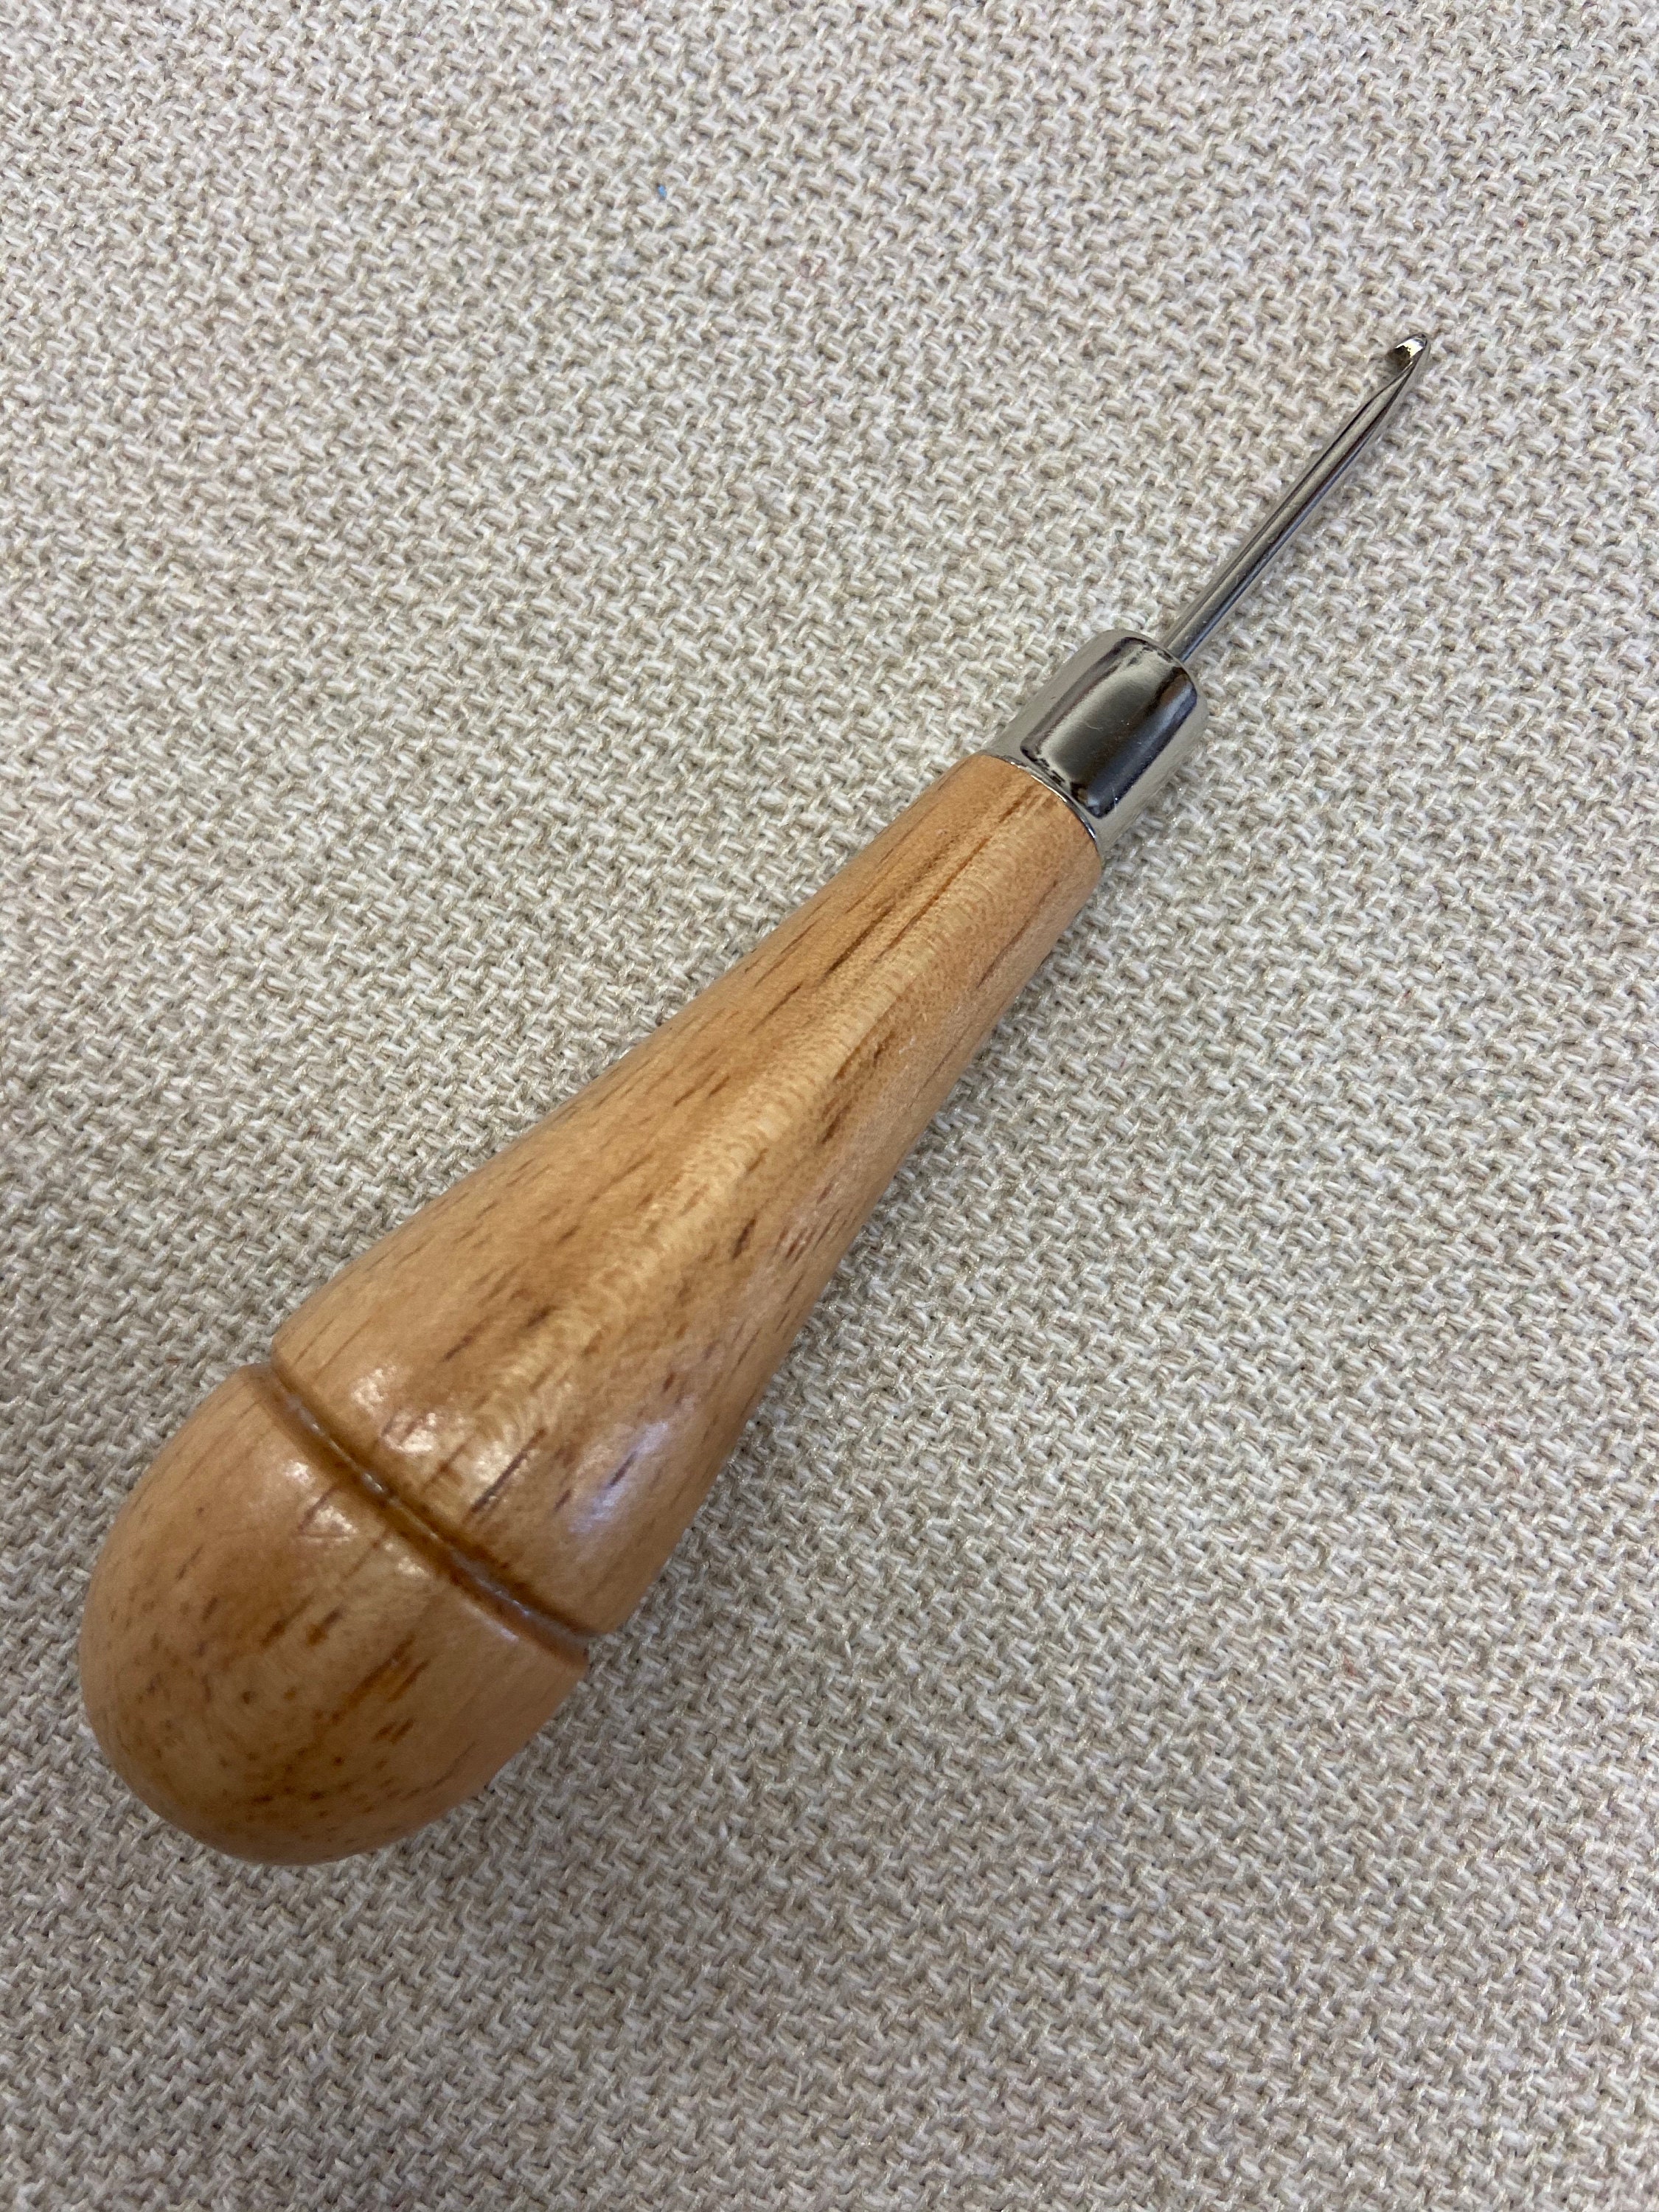 Wooden Rug Hook Tool for Primitive Rug Hooking and Rug Making Free